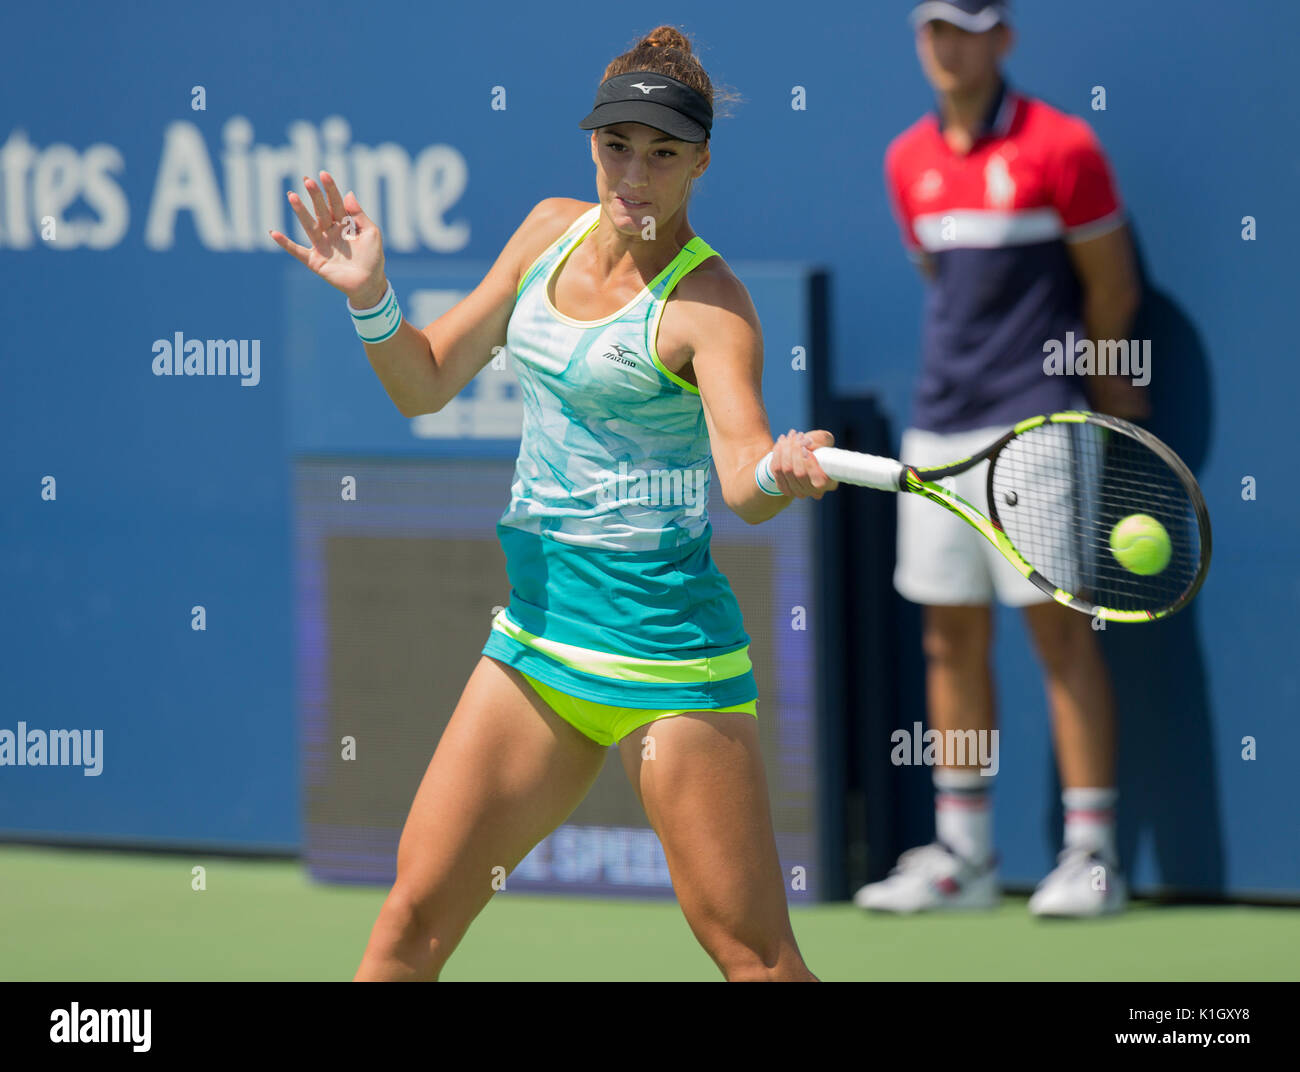 Bernarda pera (born 3 december 1994) is a tennis player who competes intern...